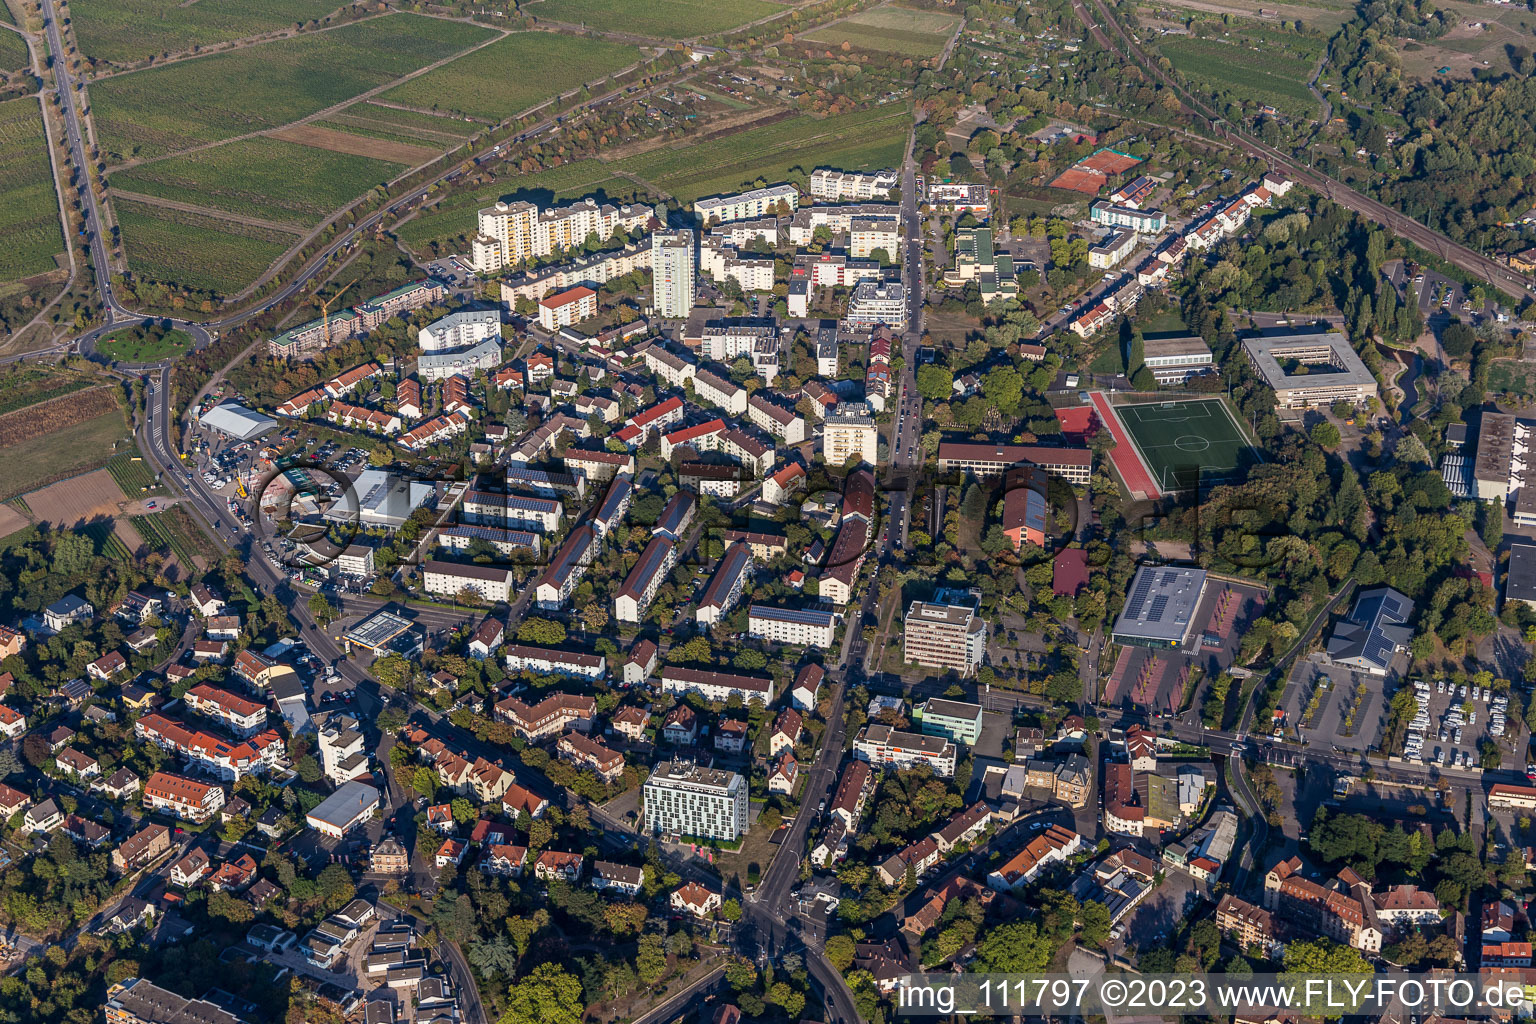 Vue aérienne de Neustadt an der Weinstraße dans le département Rhénanie-Palatinat, Allemagne